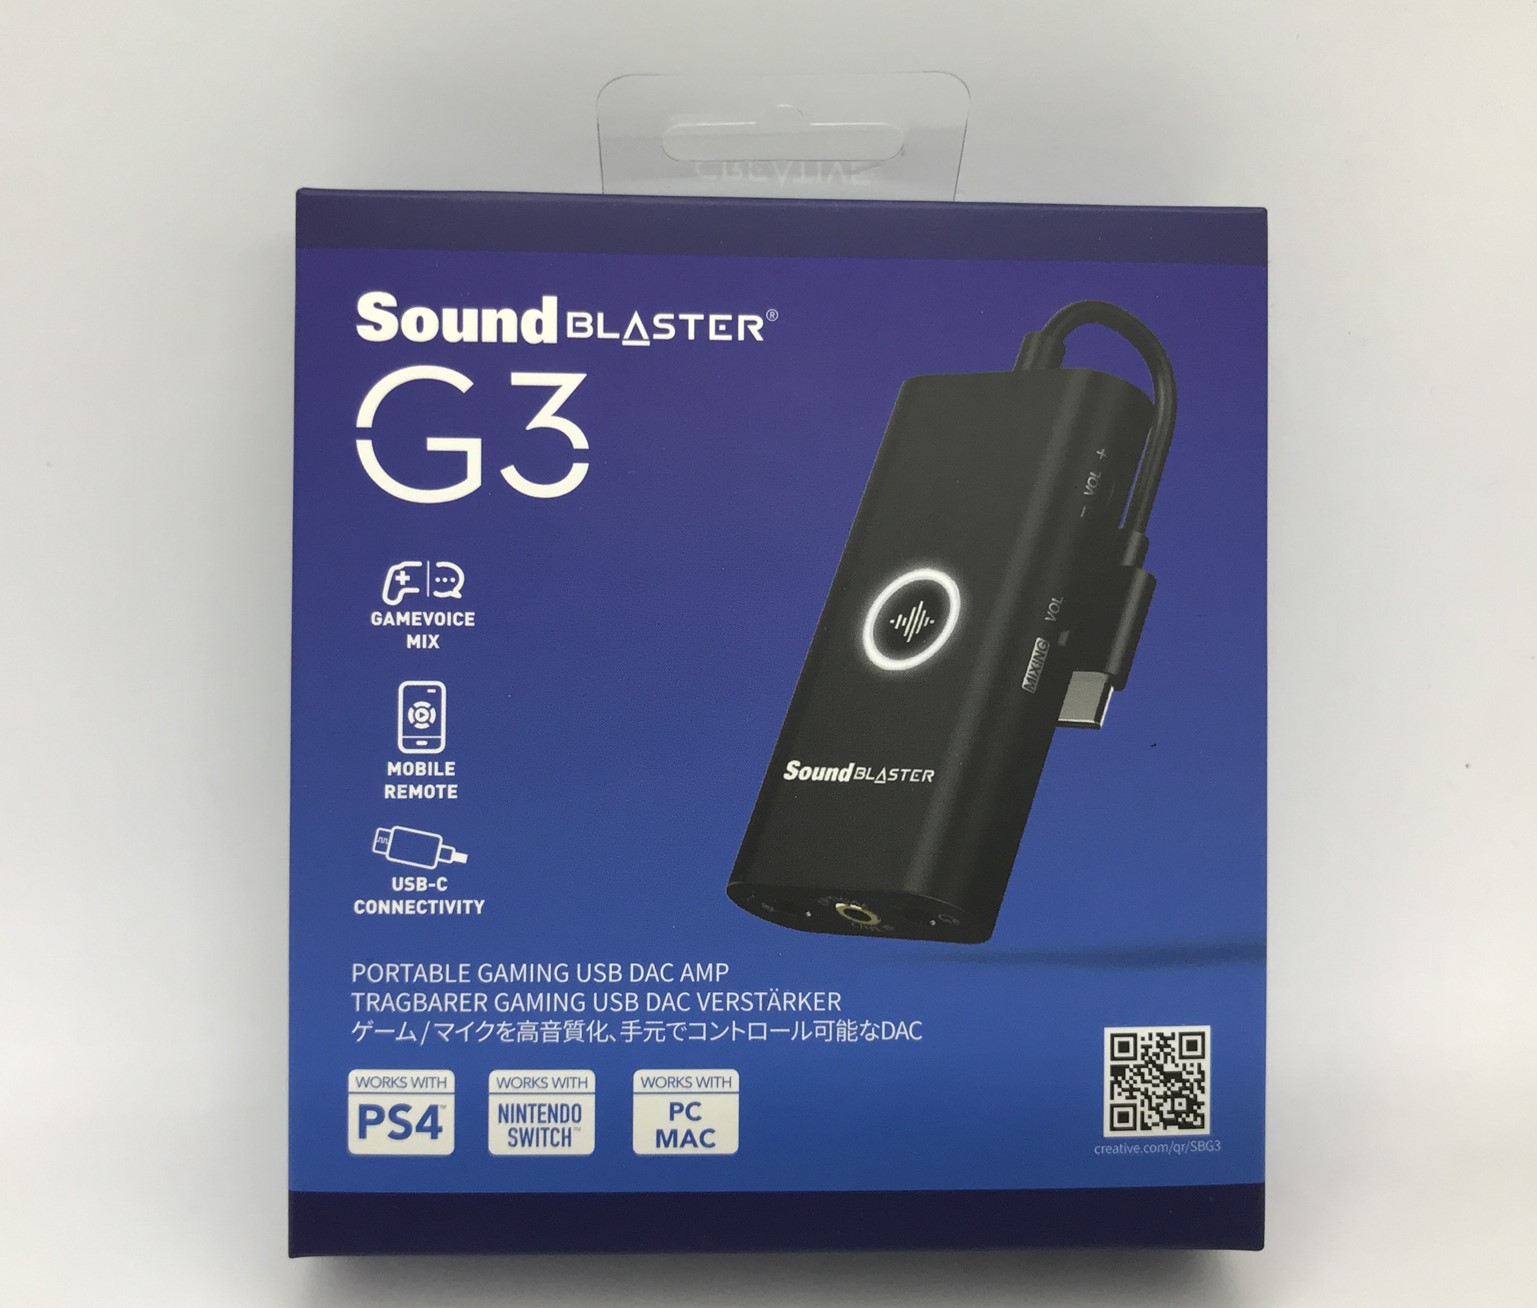 Creative Soundblaster G3レビュー 手軽に高音質とイコライザーのサウンドカード ぷちろぐ